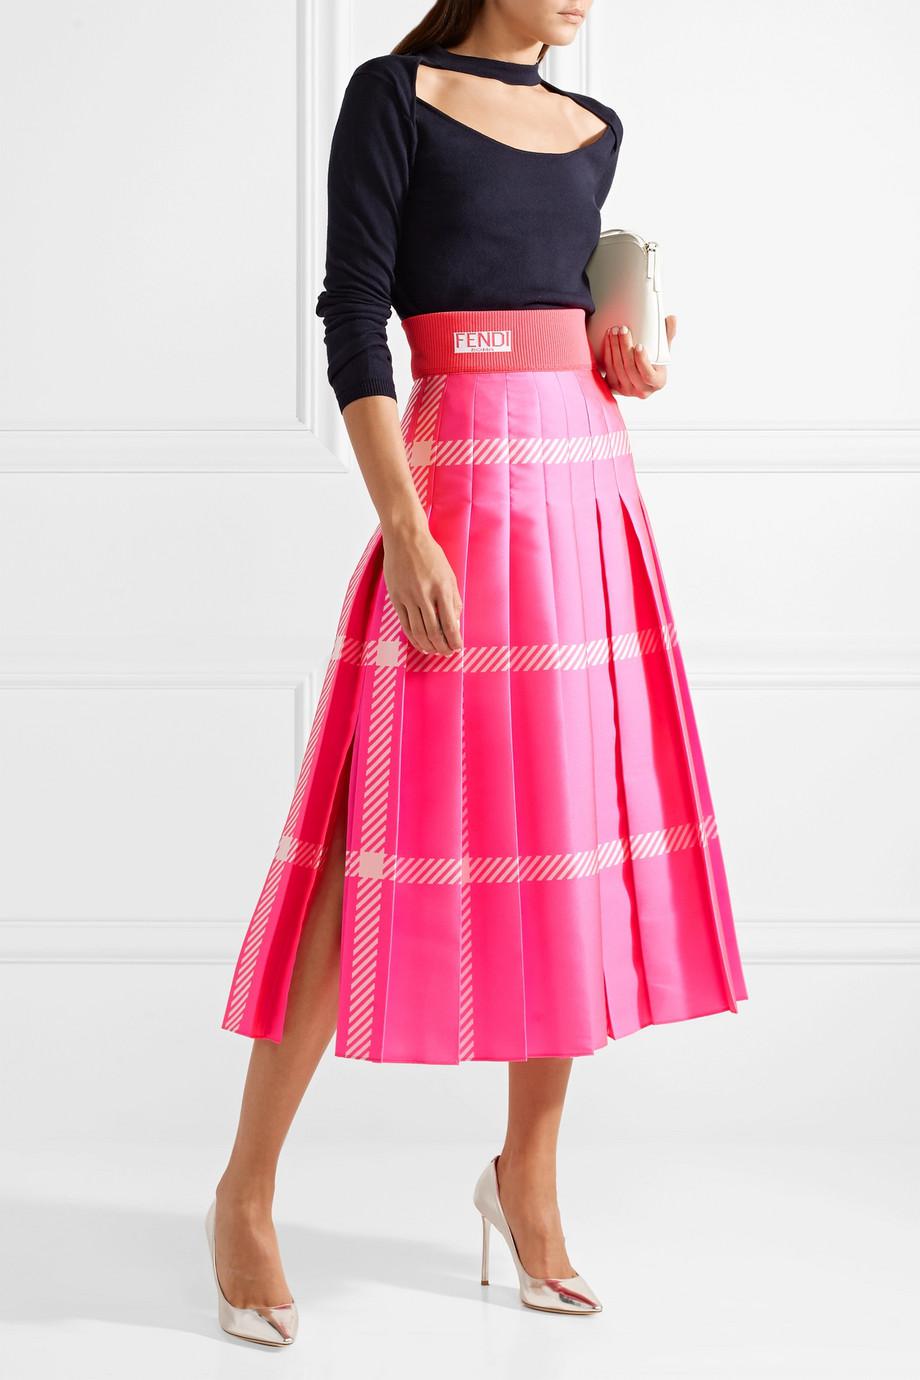 Fendi Pleated Checked Jacquard Midi Skirt in Fuchsia (Pink) | Lyst